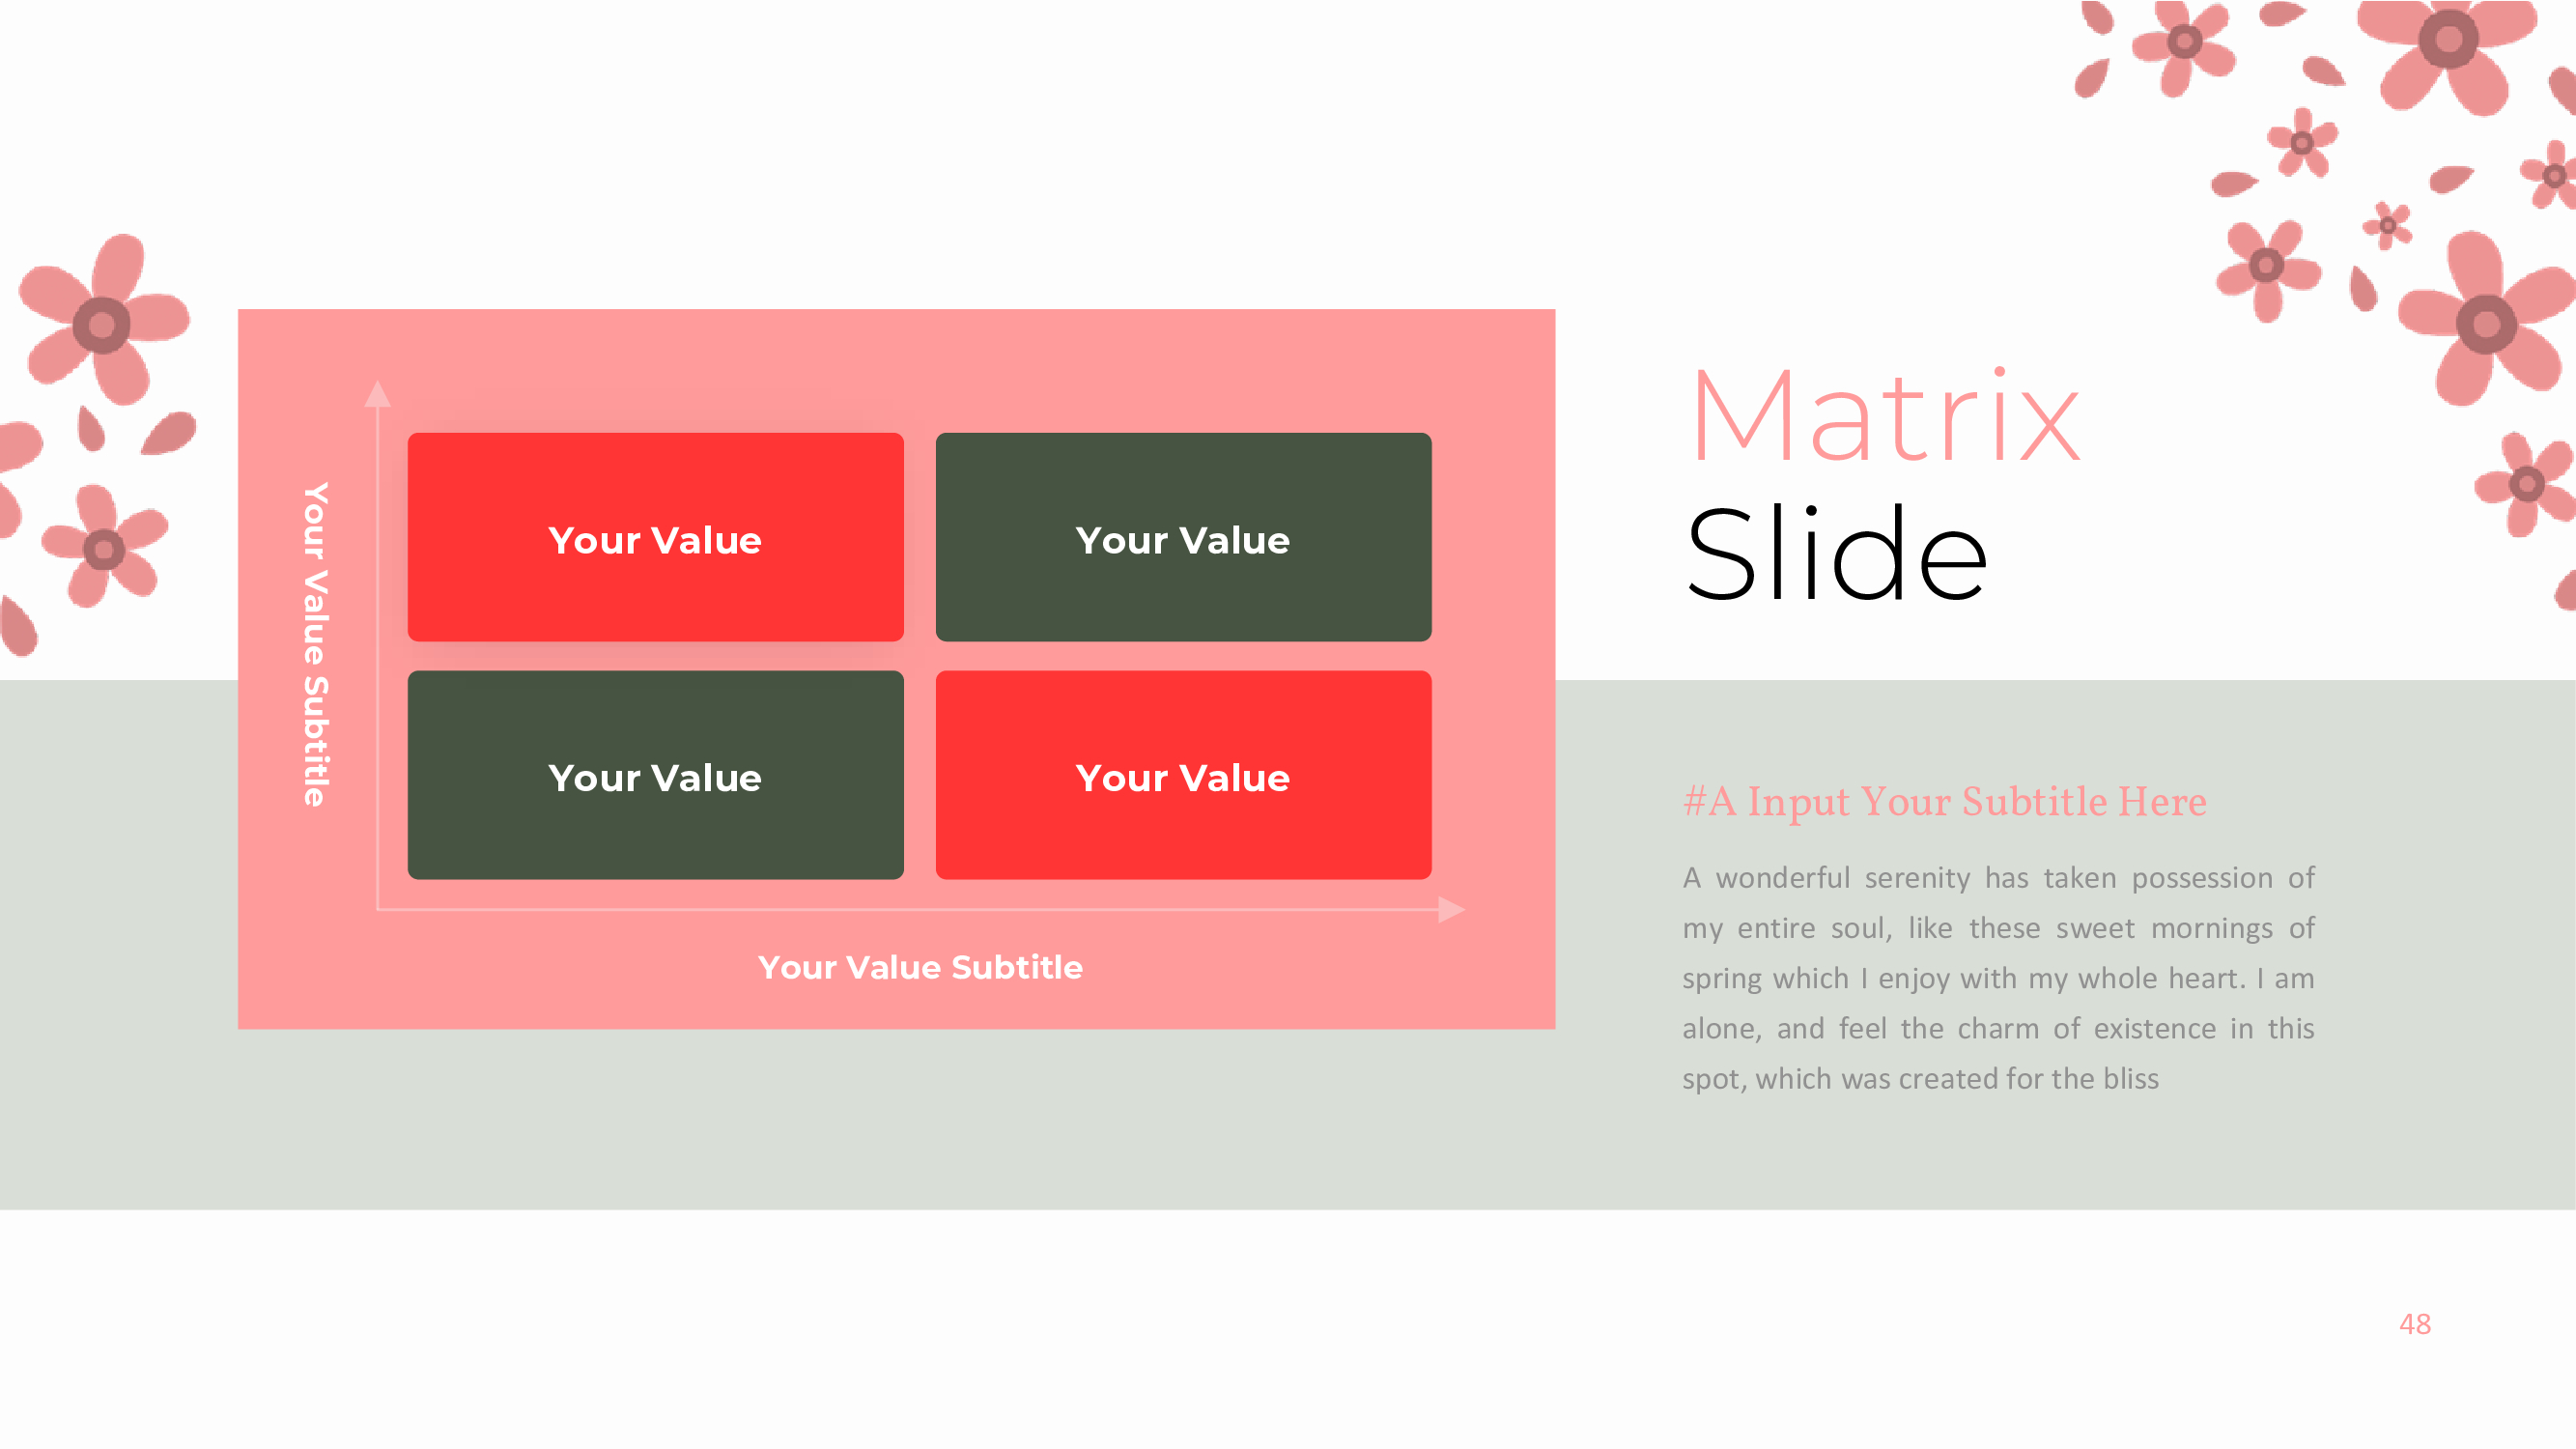 Here is a matrix slide.